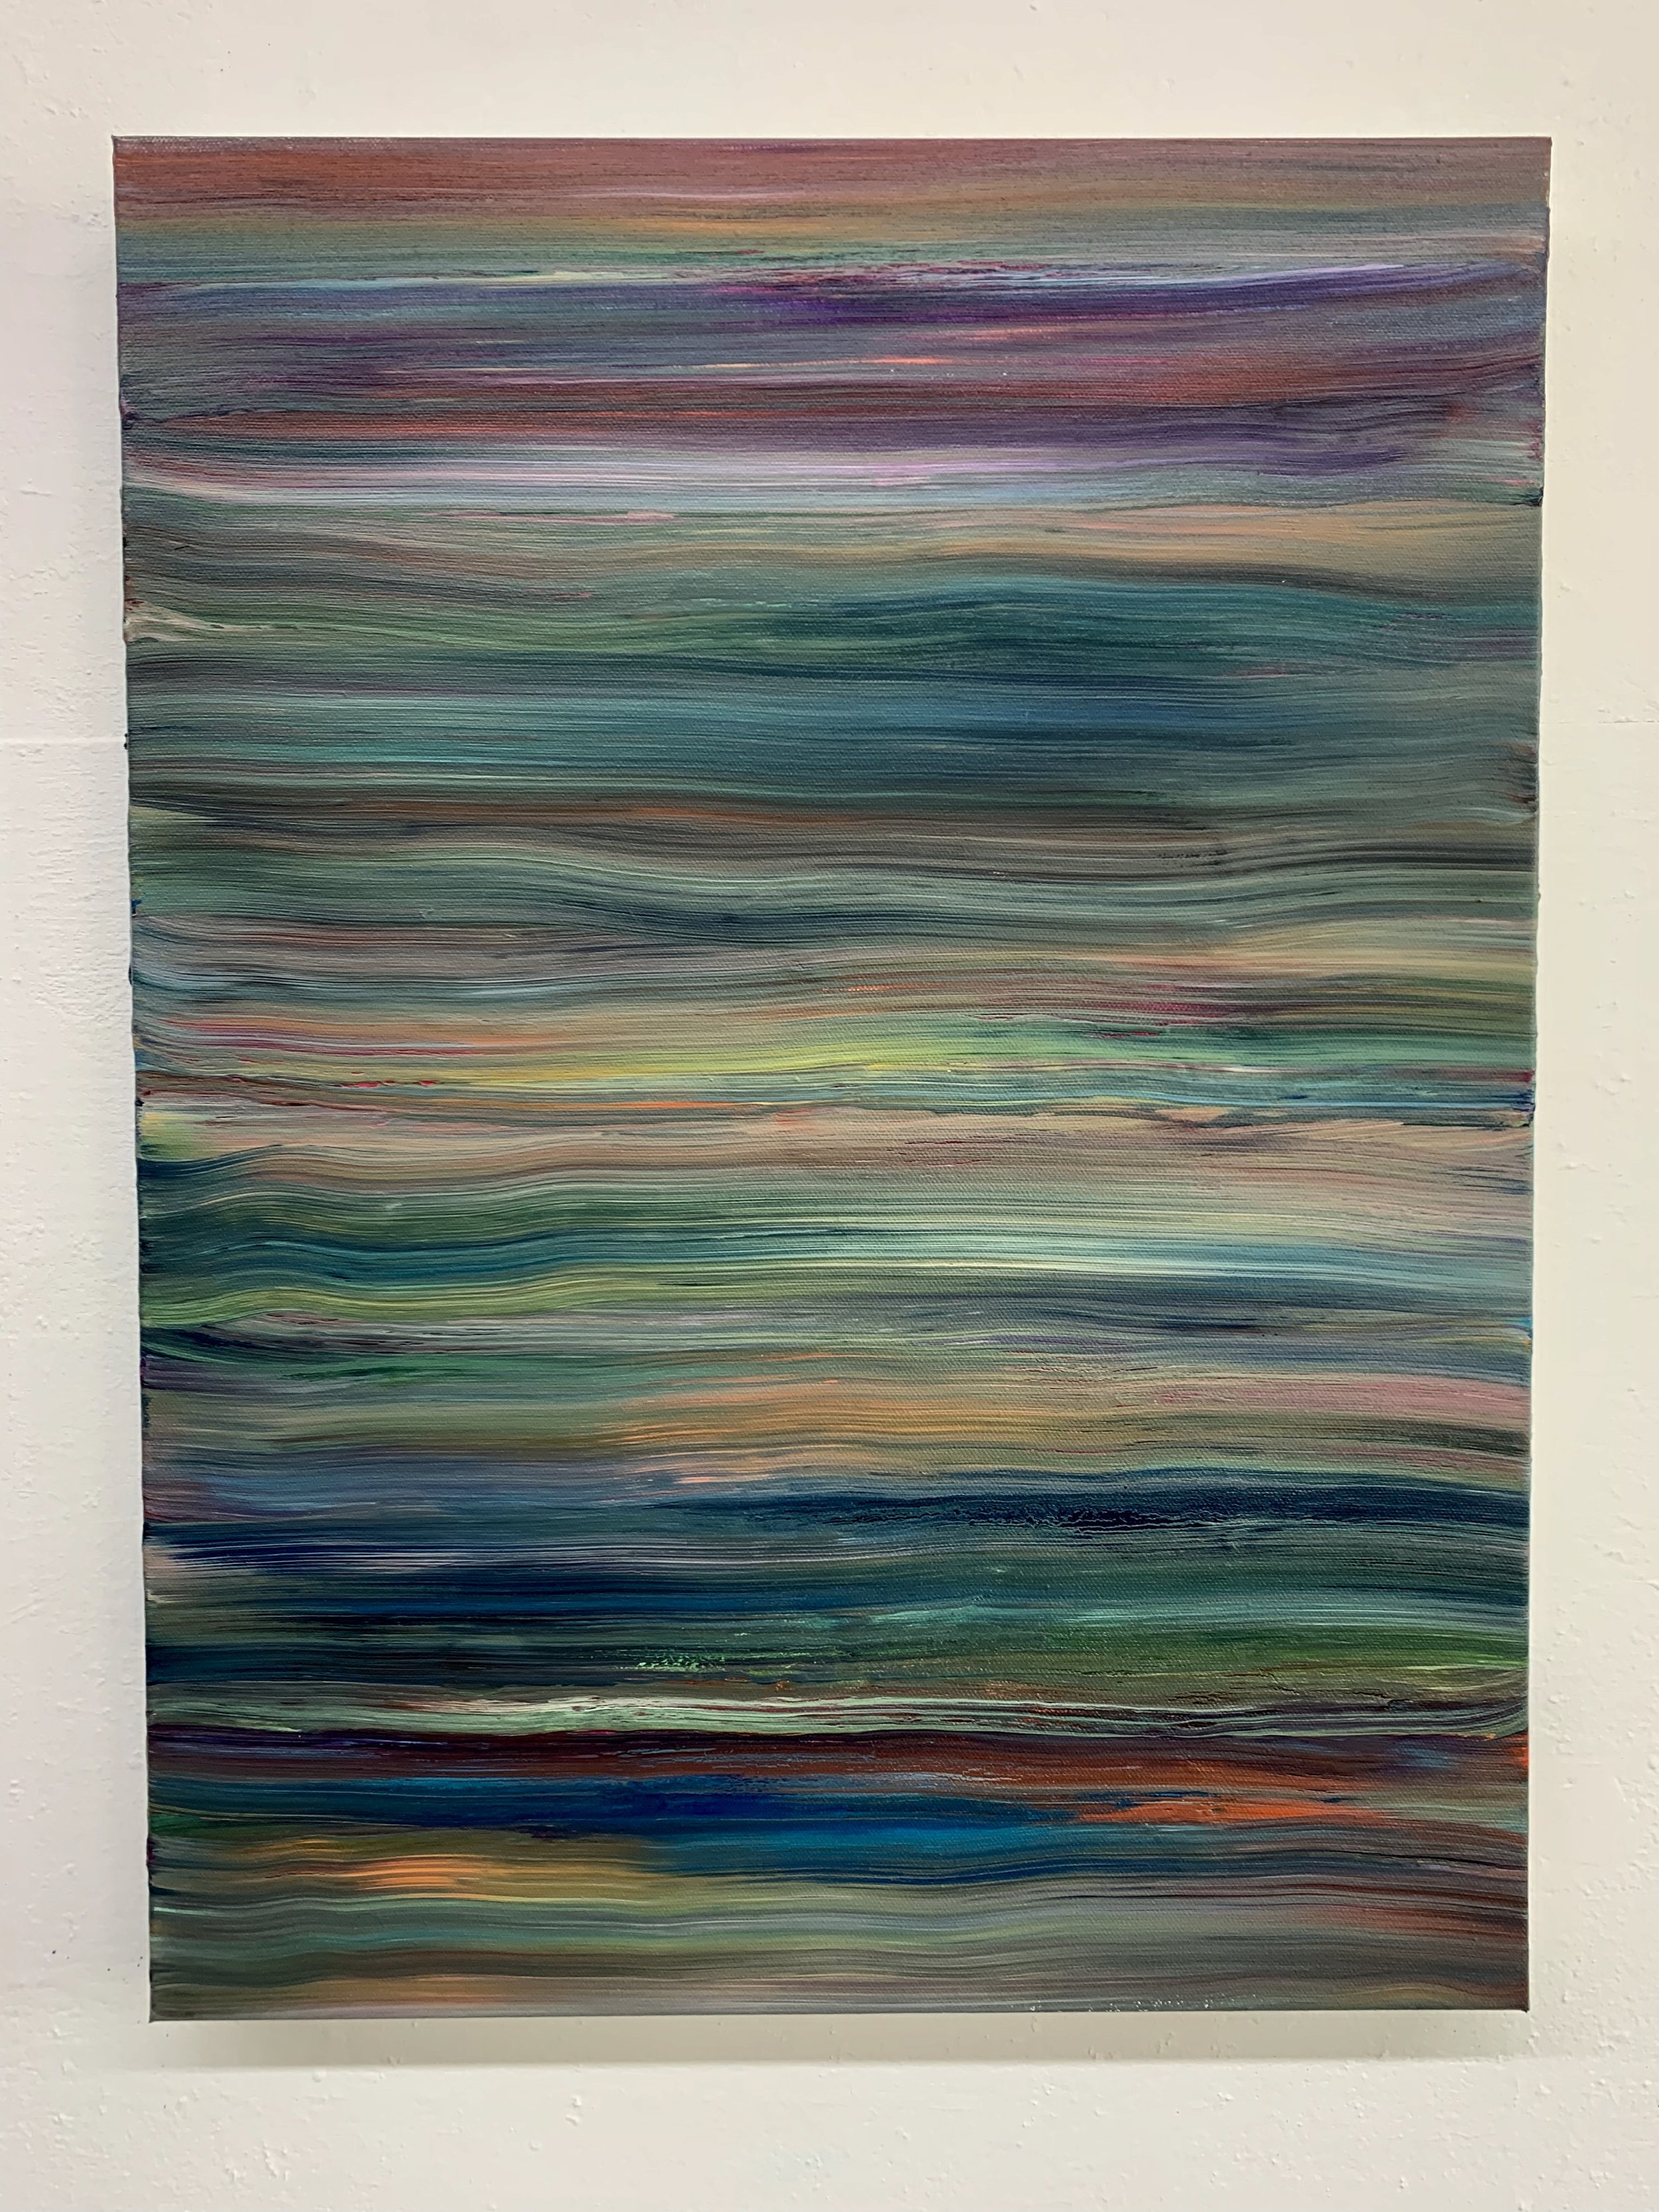 George Singer Harmonic, Haze, acrylic on canvas, 24 x 18 in